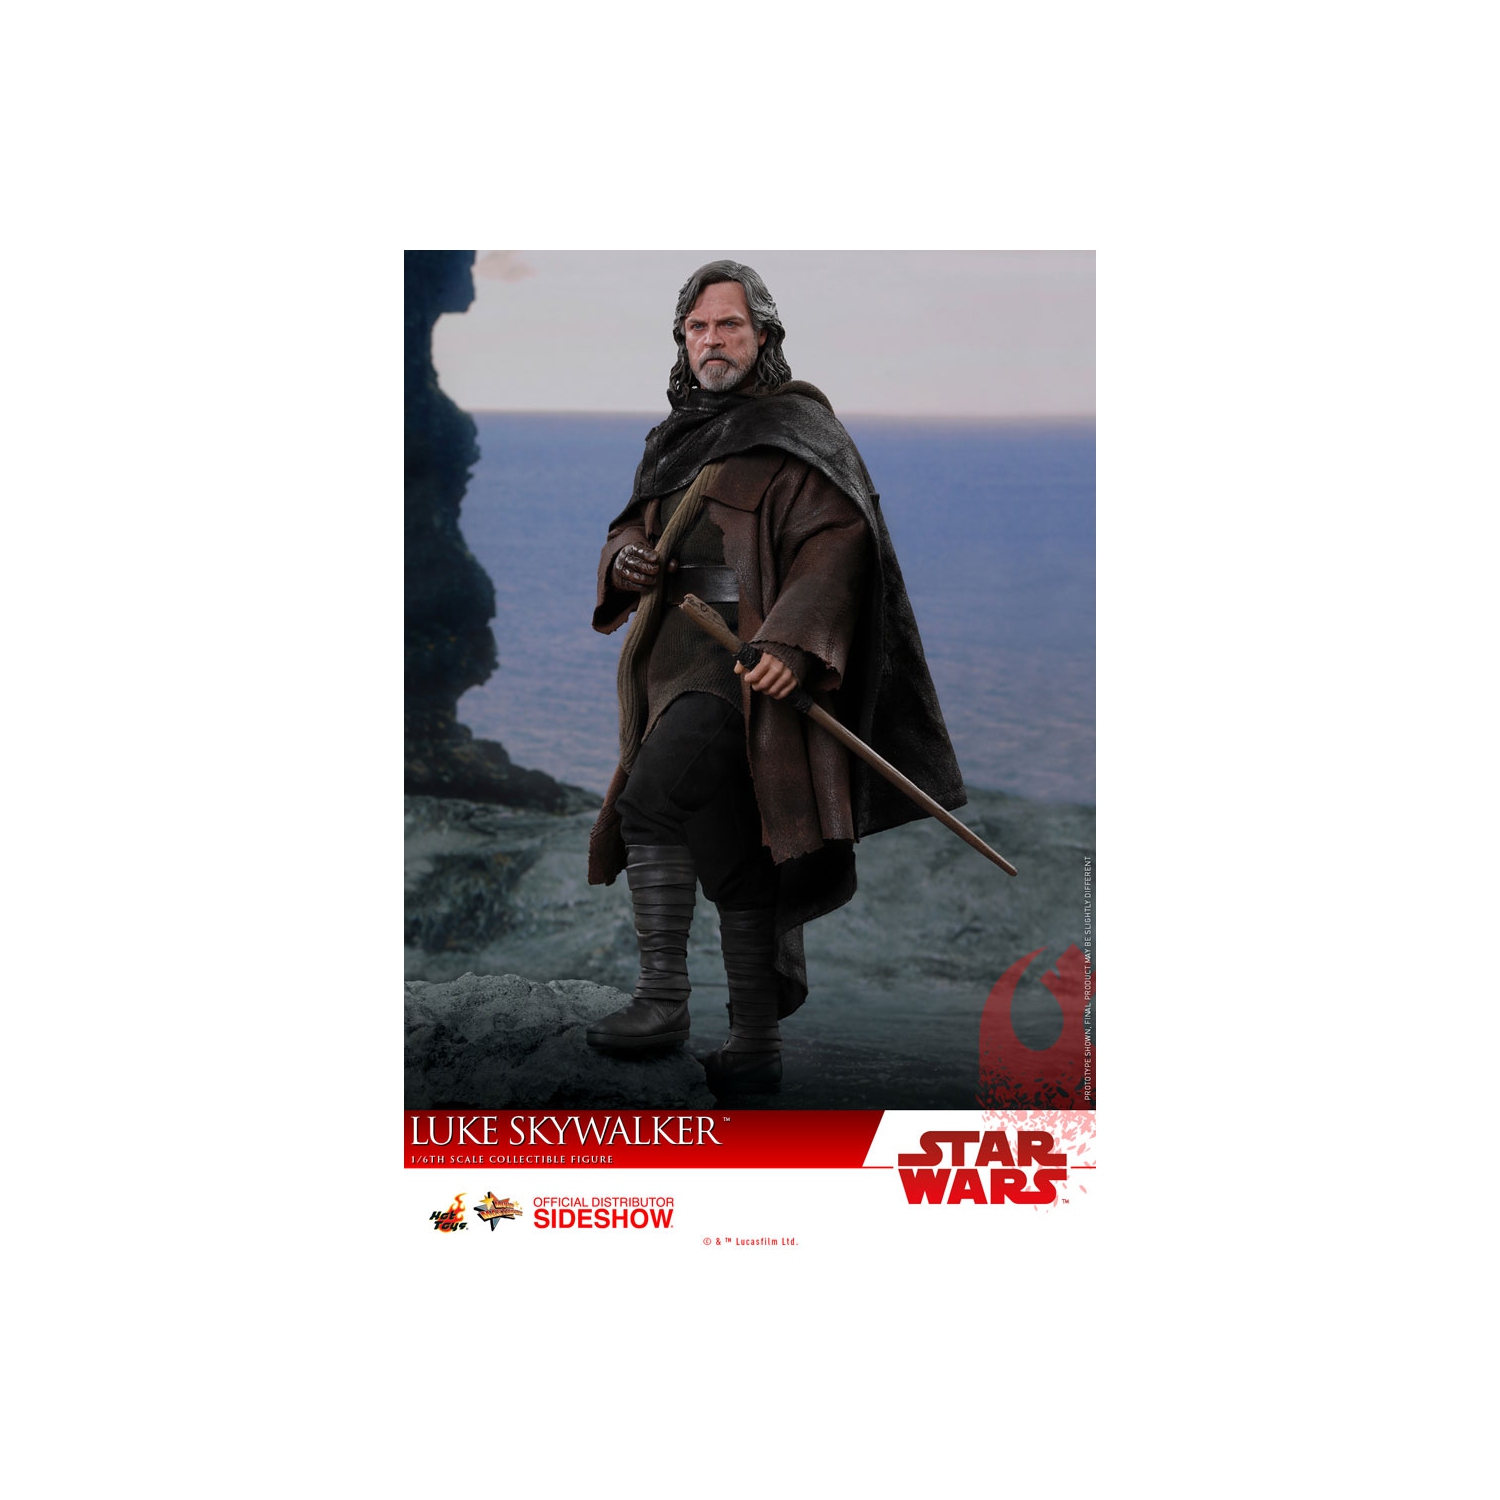 Star Wars The Last Jedi 12 Inch Action Figure Movie Masterpiece 1/6 Scale Series - Luke Skywalker Hot Toys 903316